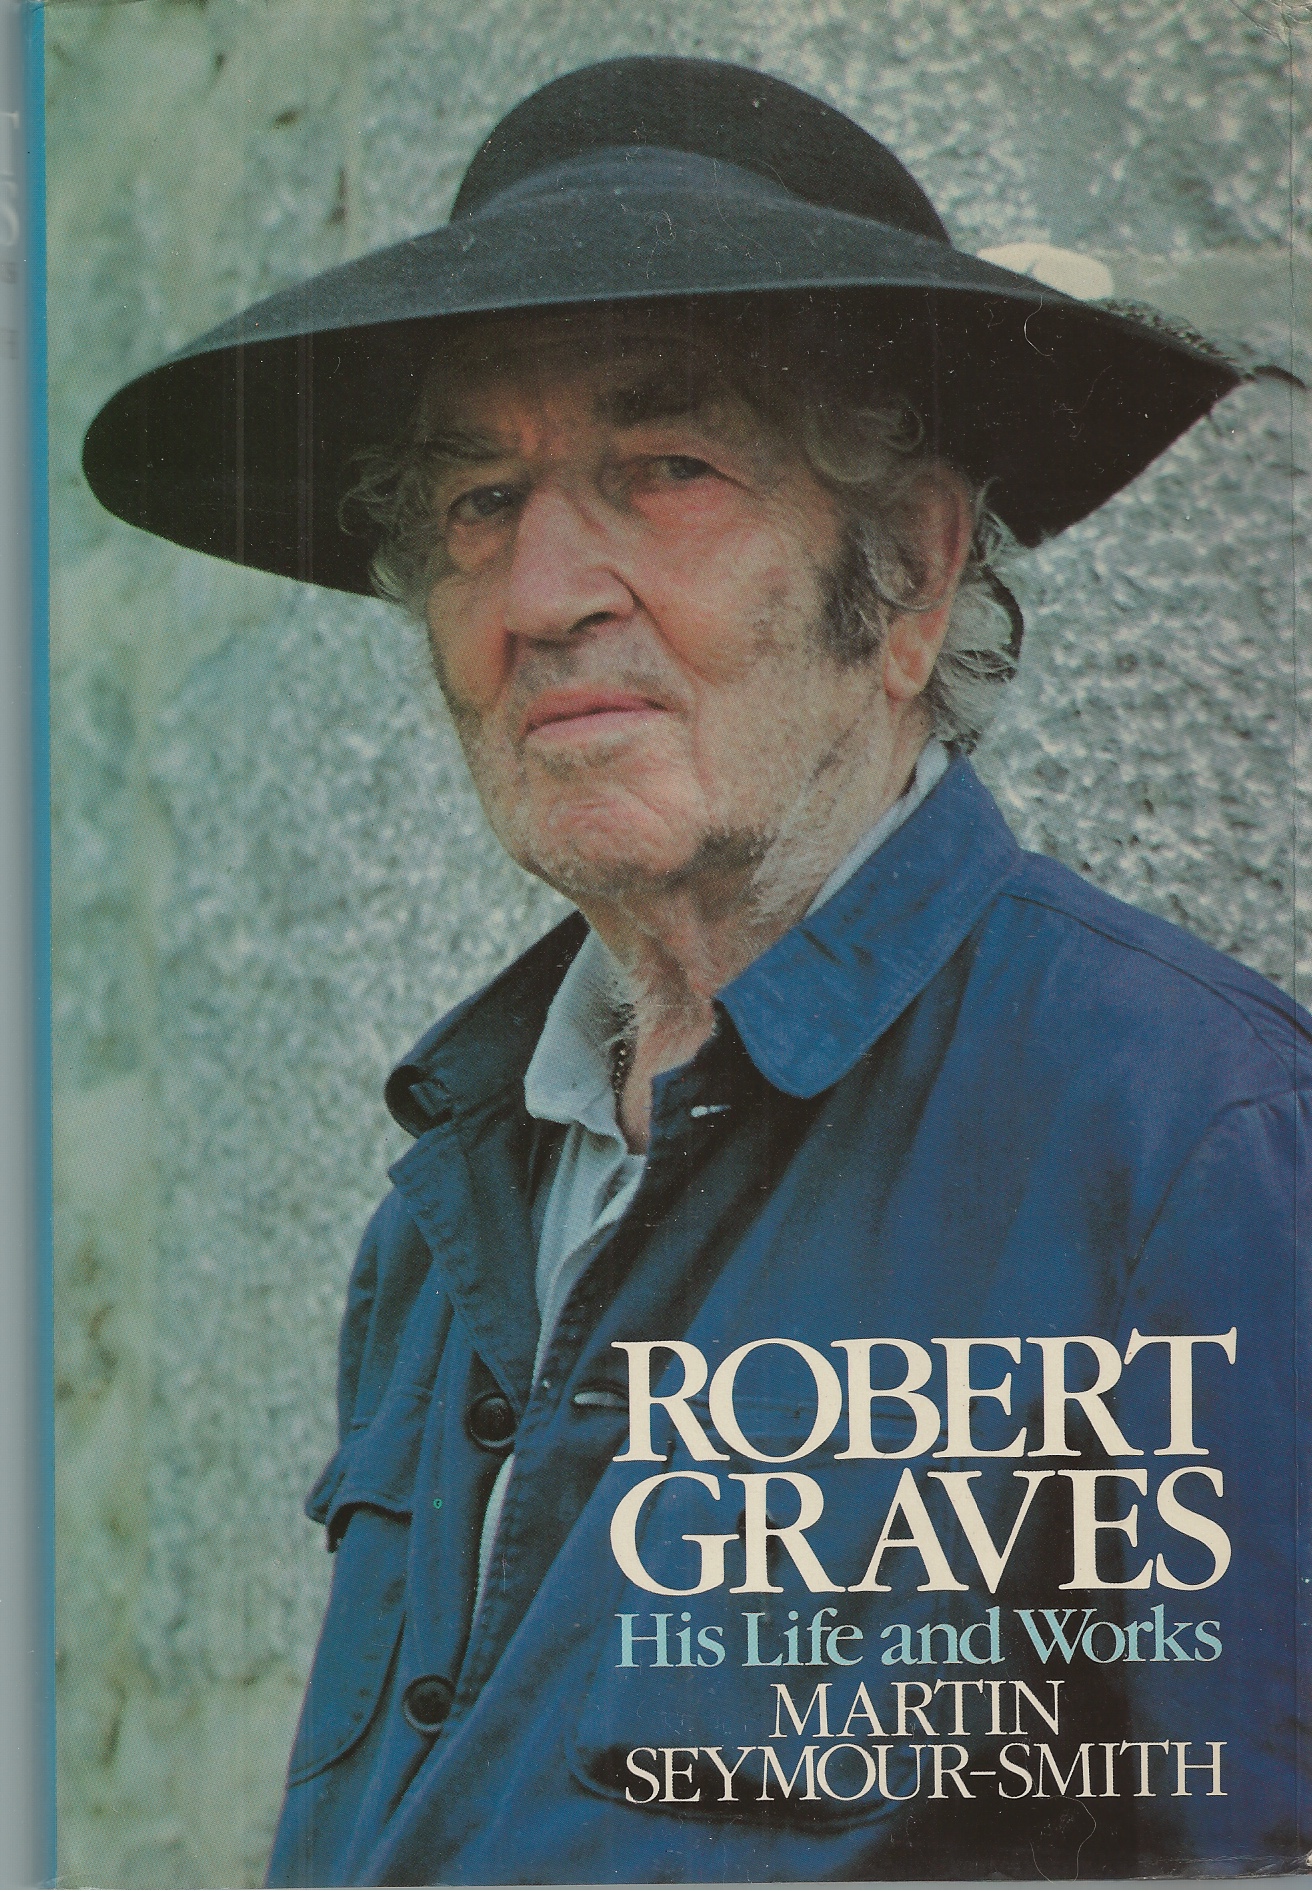 SEYMOUR-SMITH, MARTIN - Robert Graves His Life and Works